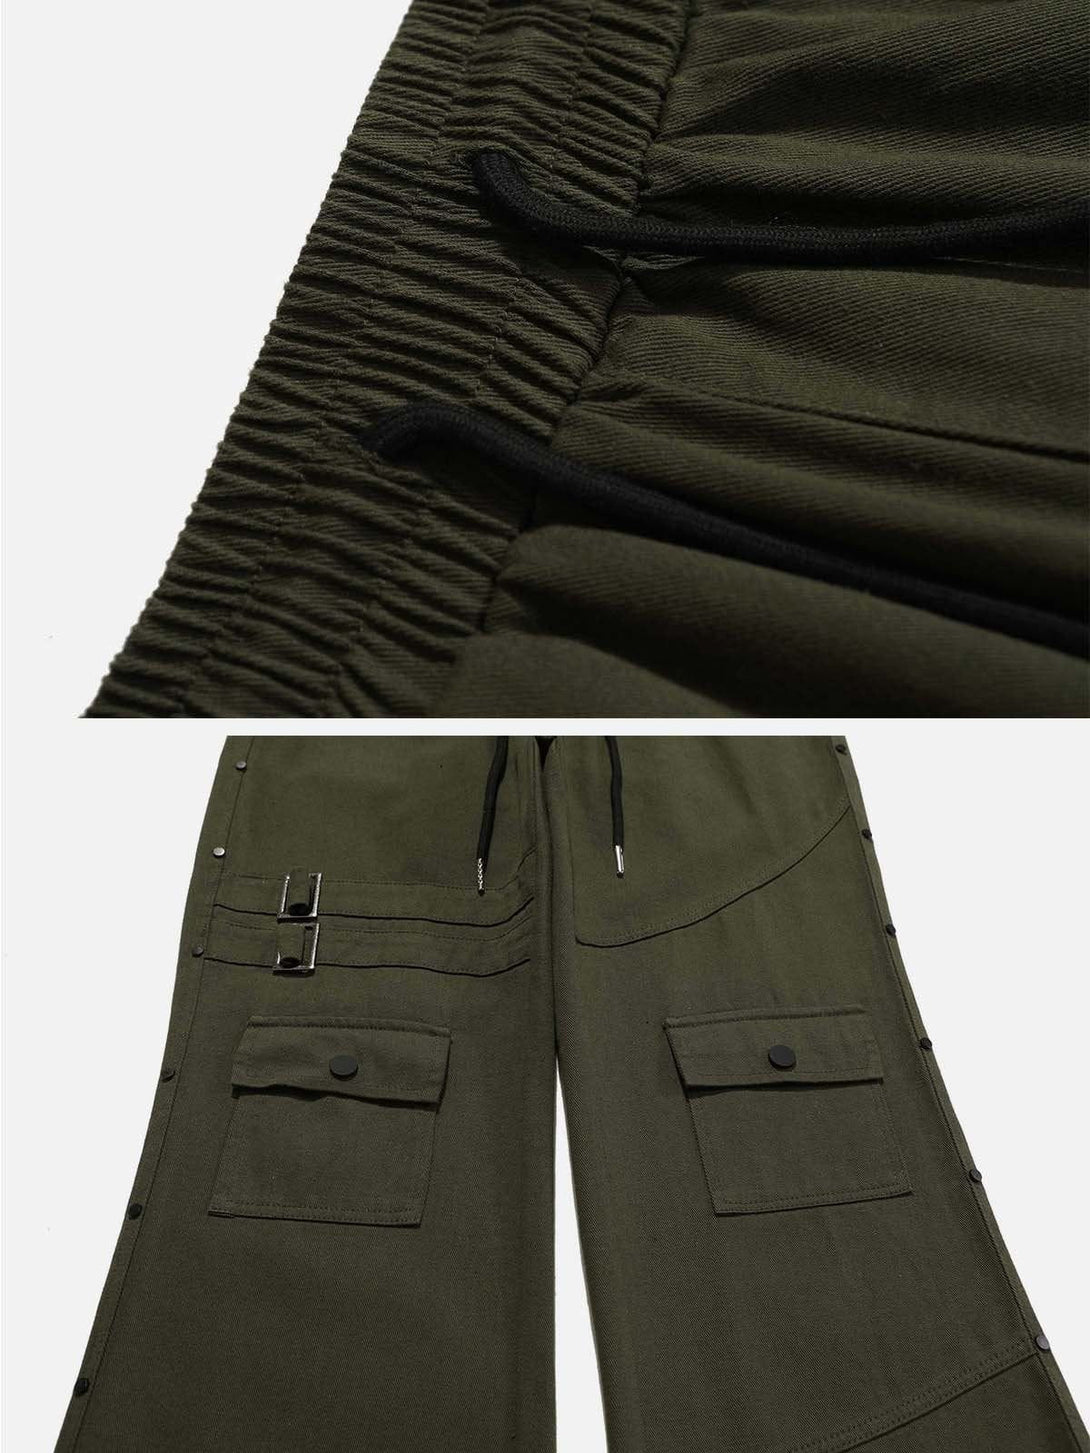 Majesda® - Multi-Pocket Drawstring Cargo Pants outfit ideas streetwear fashion